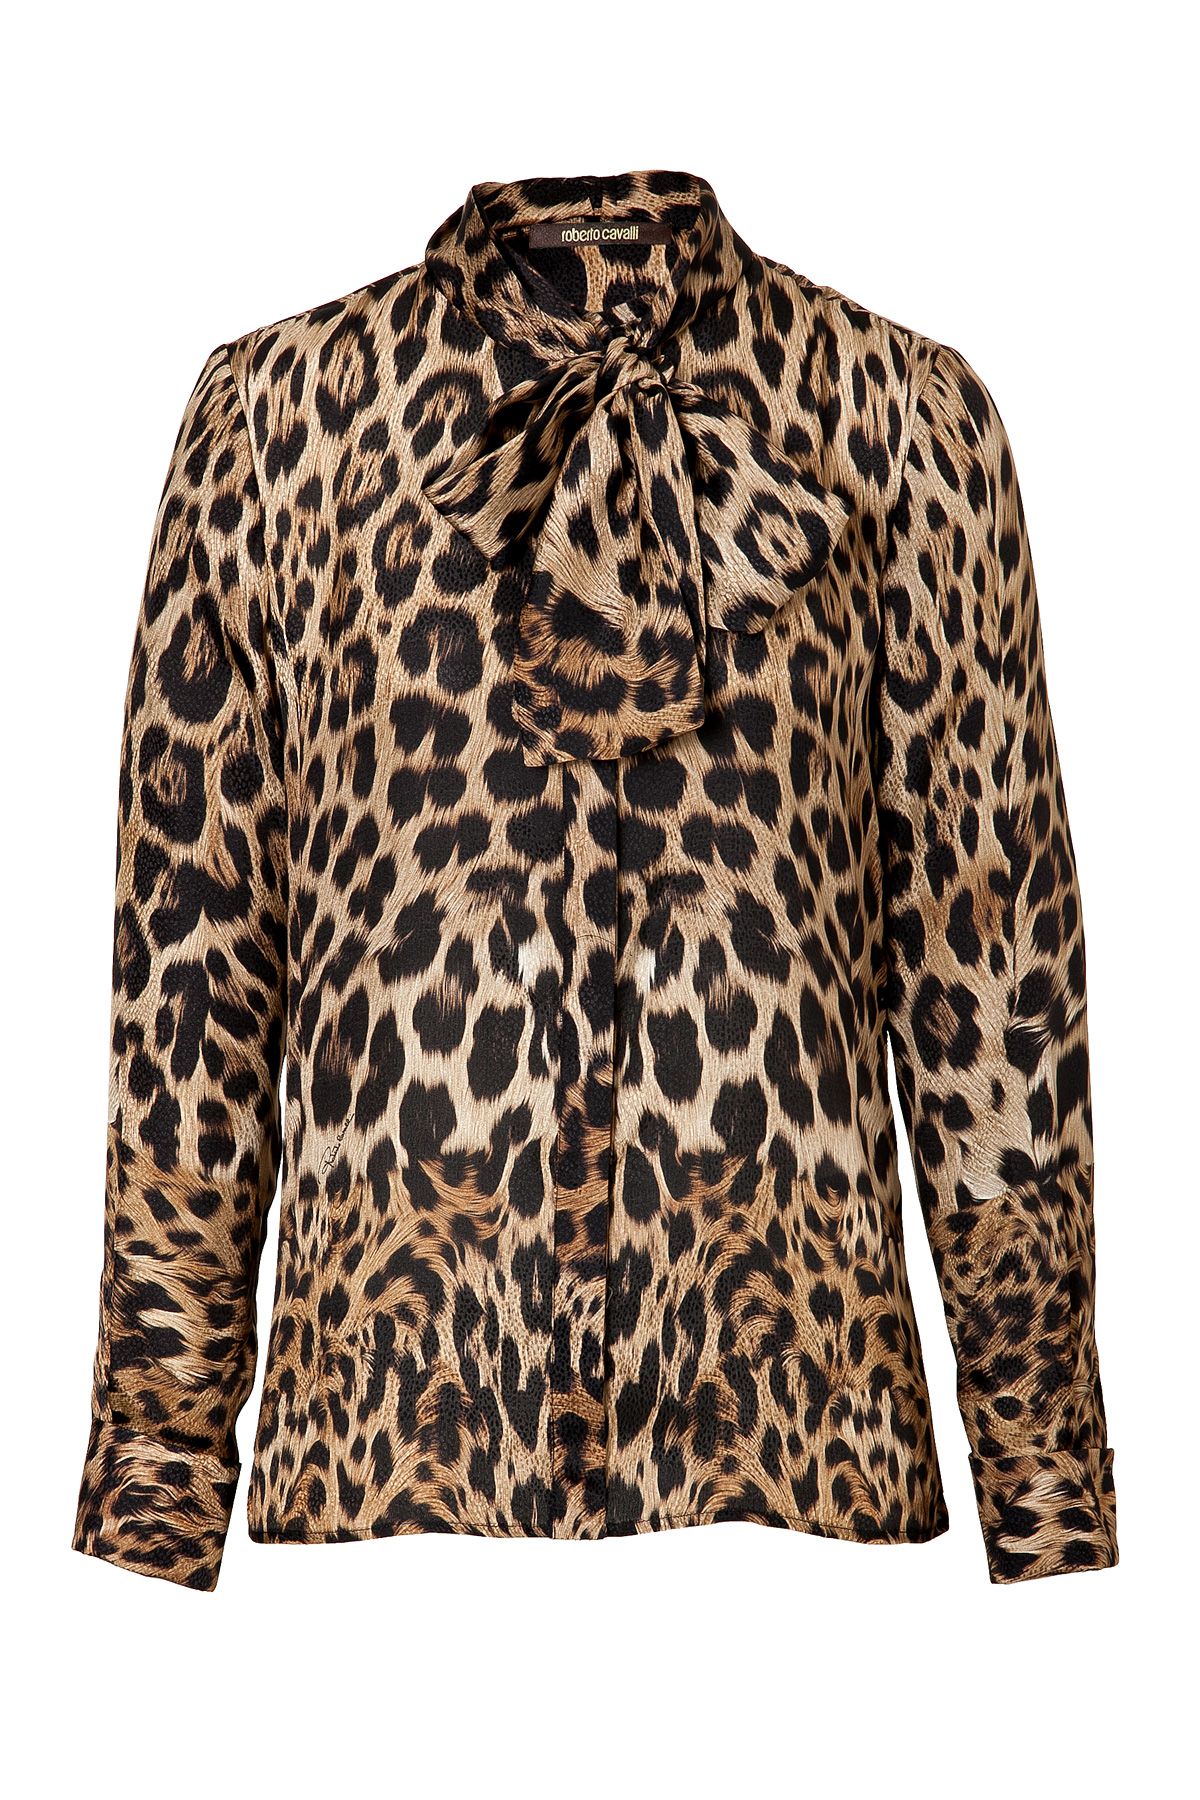 Roberto cavalli Leopard Print Tie Neck Blouse - Animal Prints in Brown ...